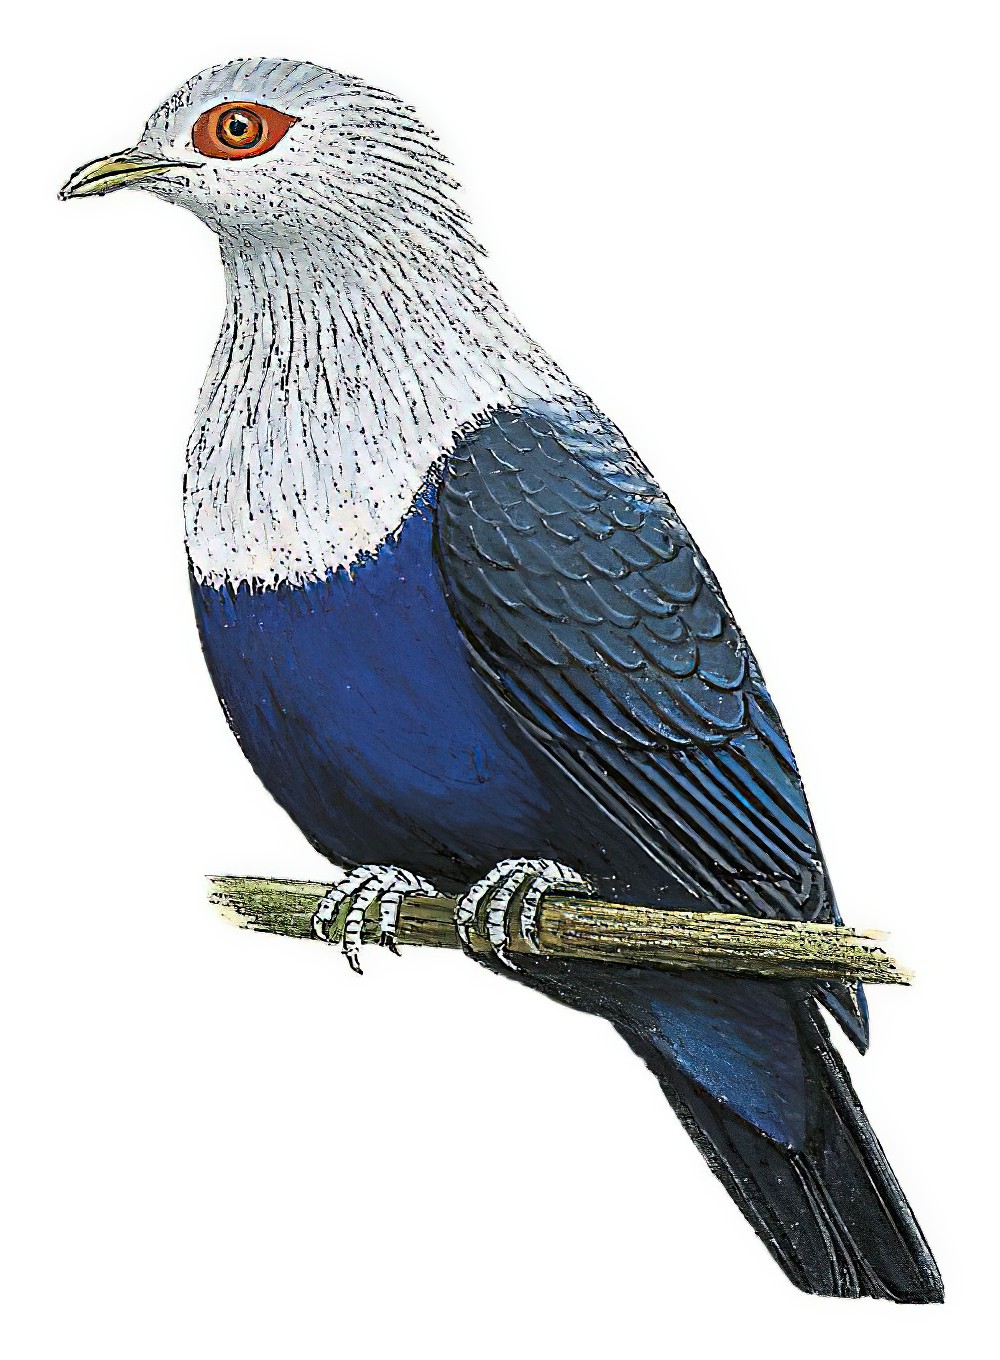 Comoro Blue-Pigeon / Alectroenas sganzini